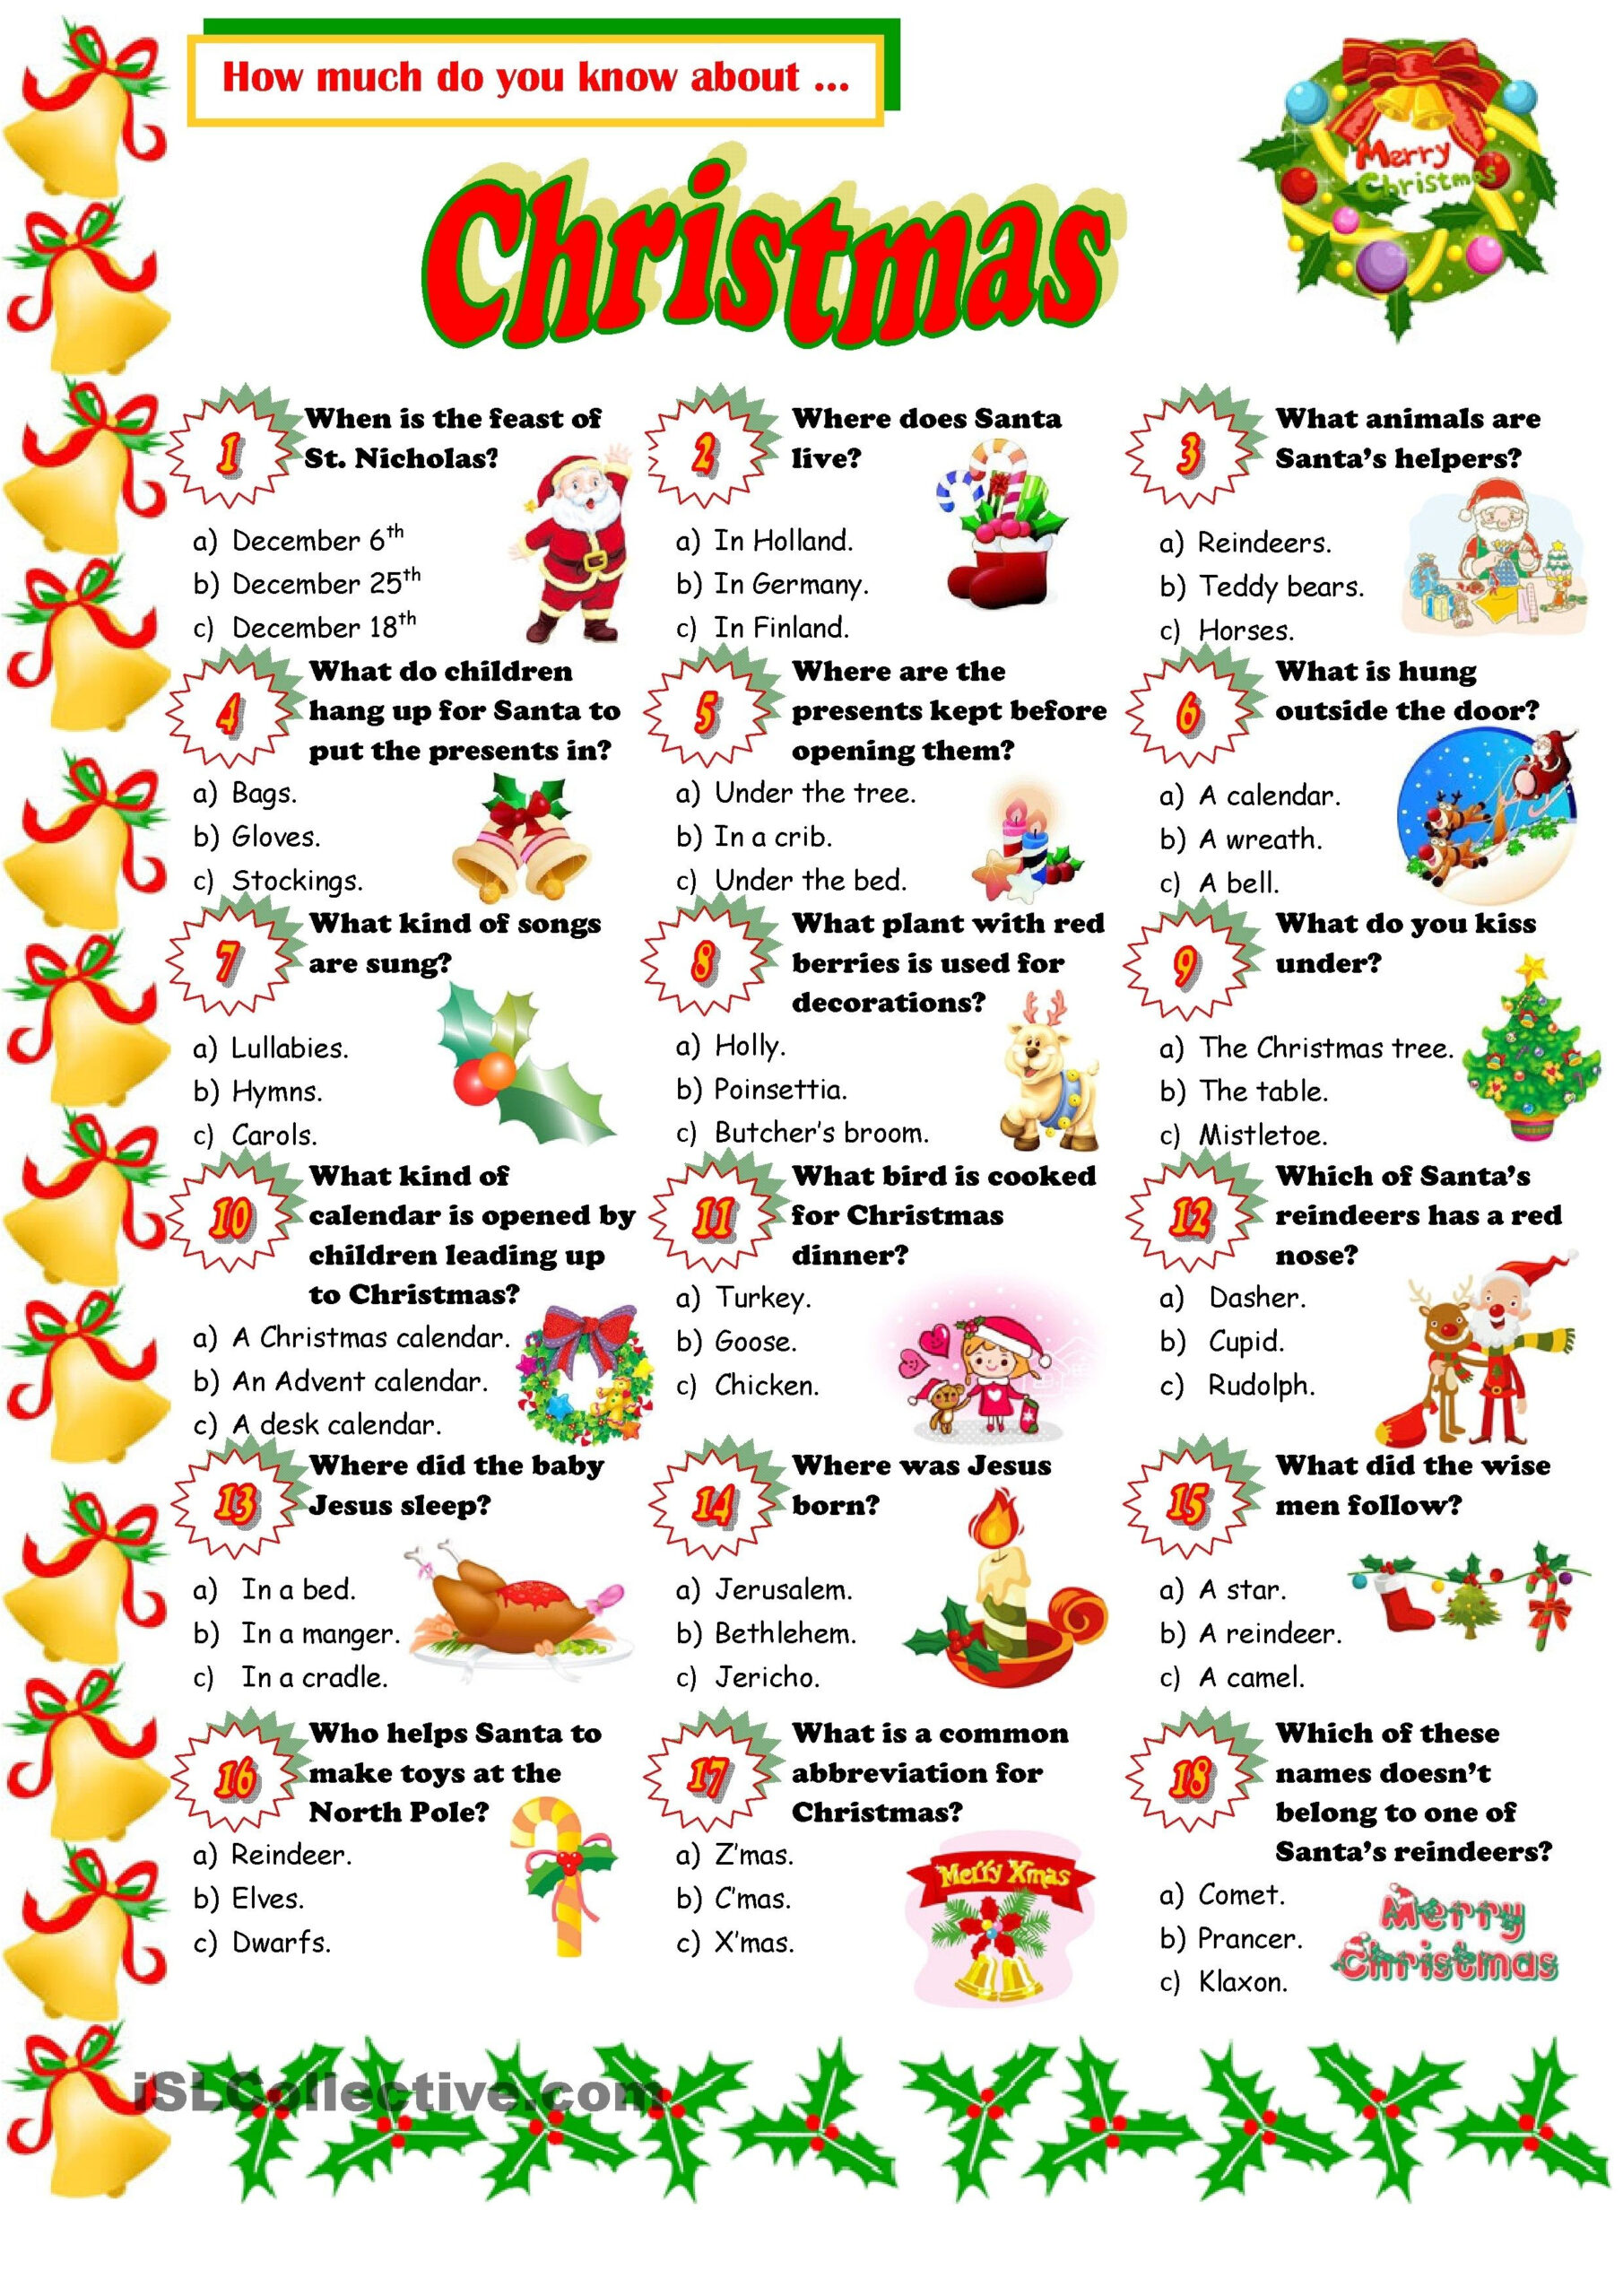 Christmas Trivia Worksheets